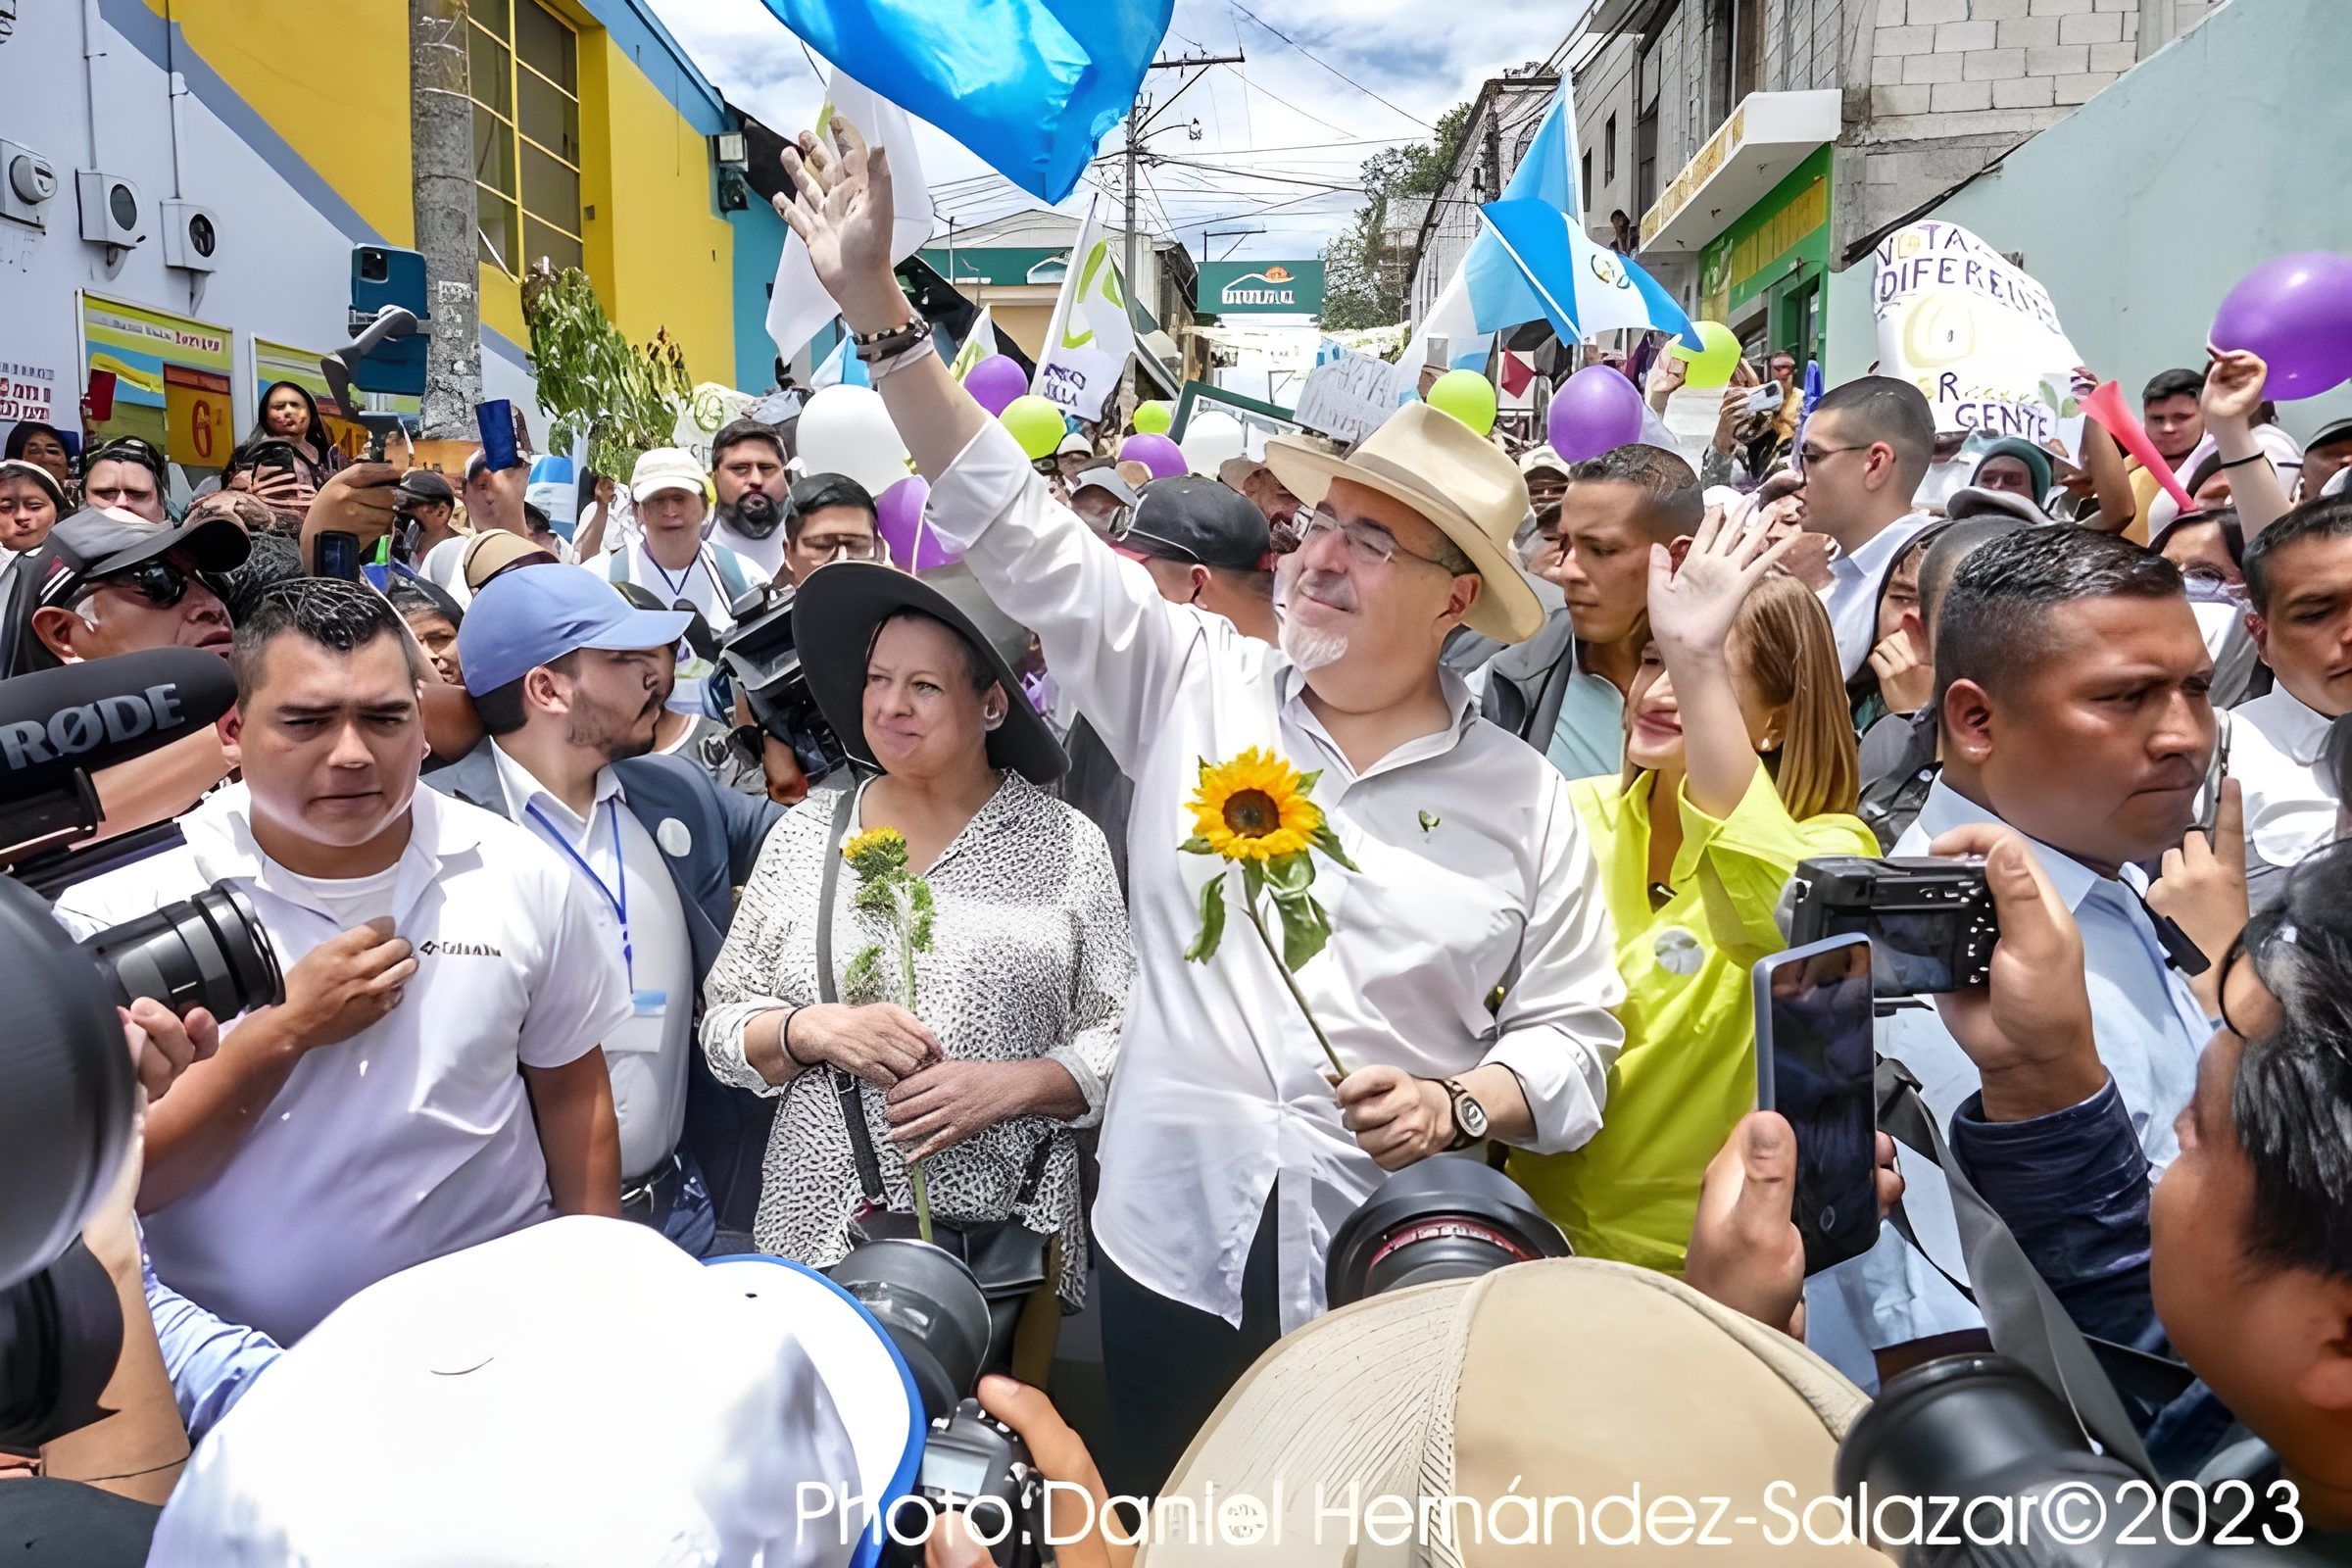 Intento por descalificar candidato presidencial dispara entusiasmo electoral en Guatemala